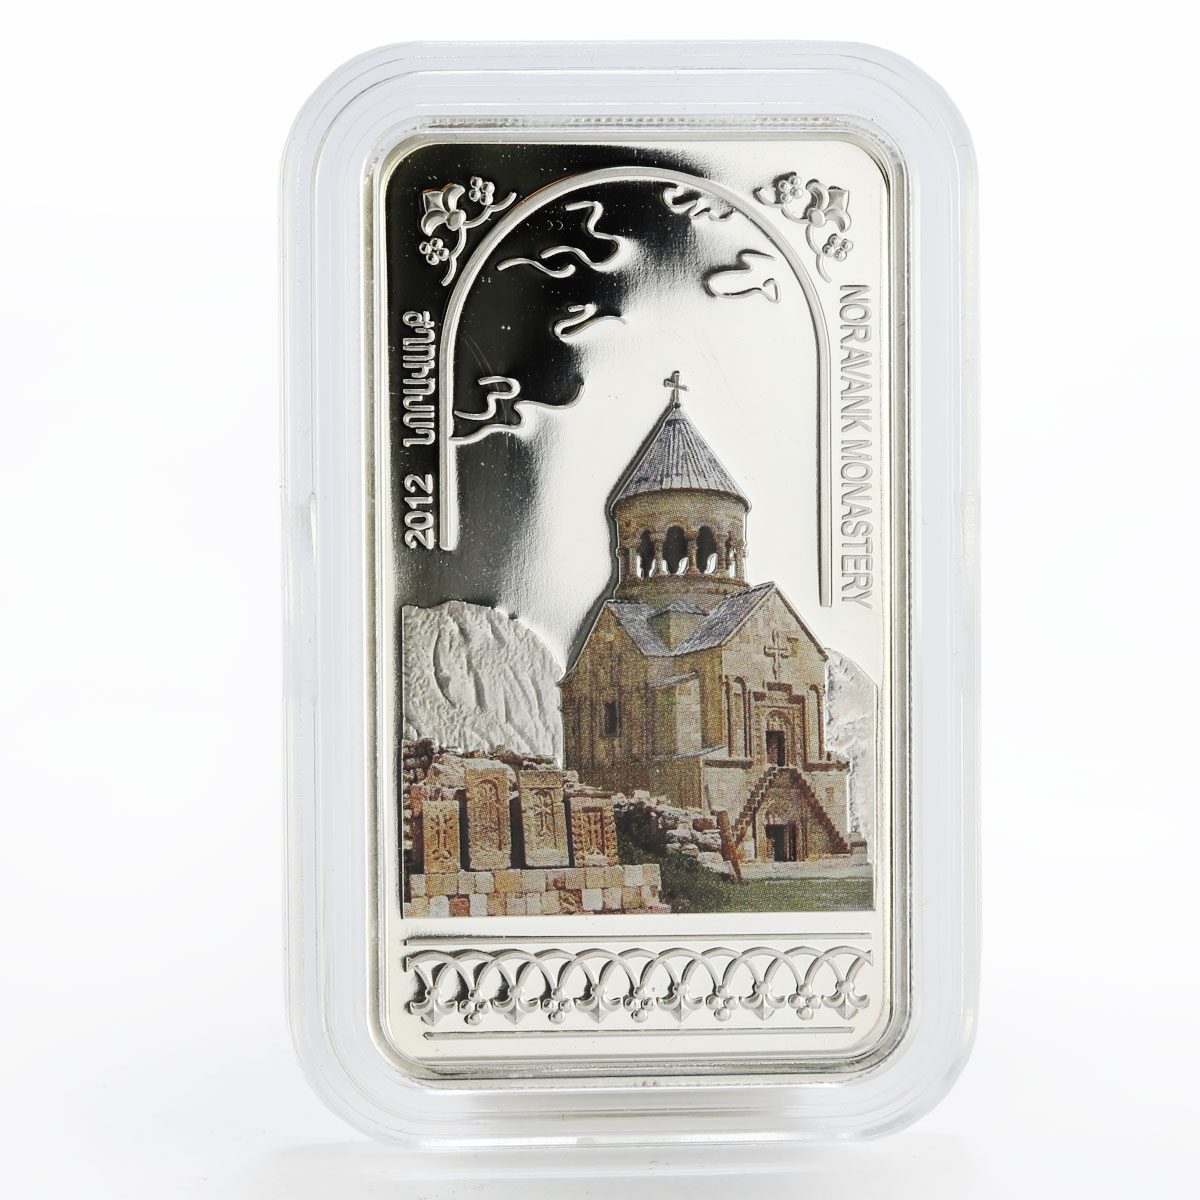 Armenia 1000 dram Monastery Noravank colored proof silver coin 2012